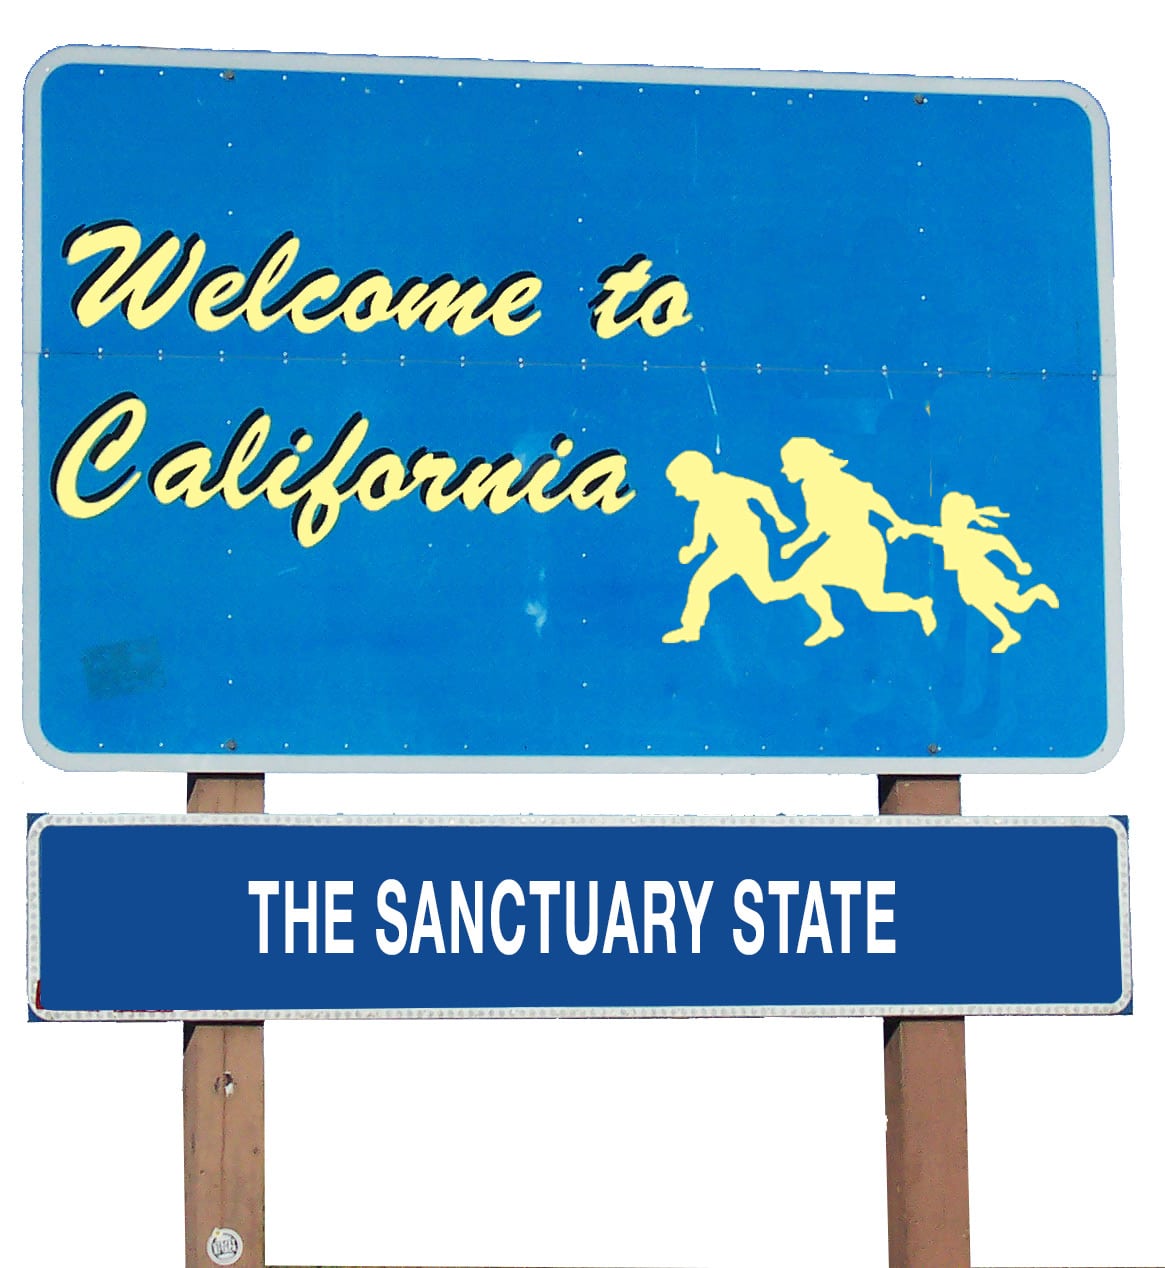 california-sanctuary-state-photocredit-theievoice-com